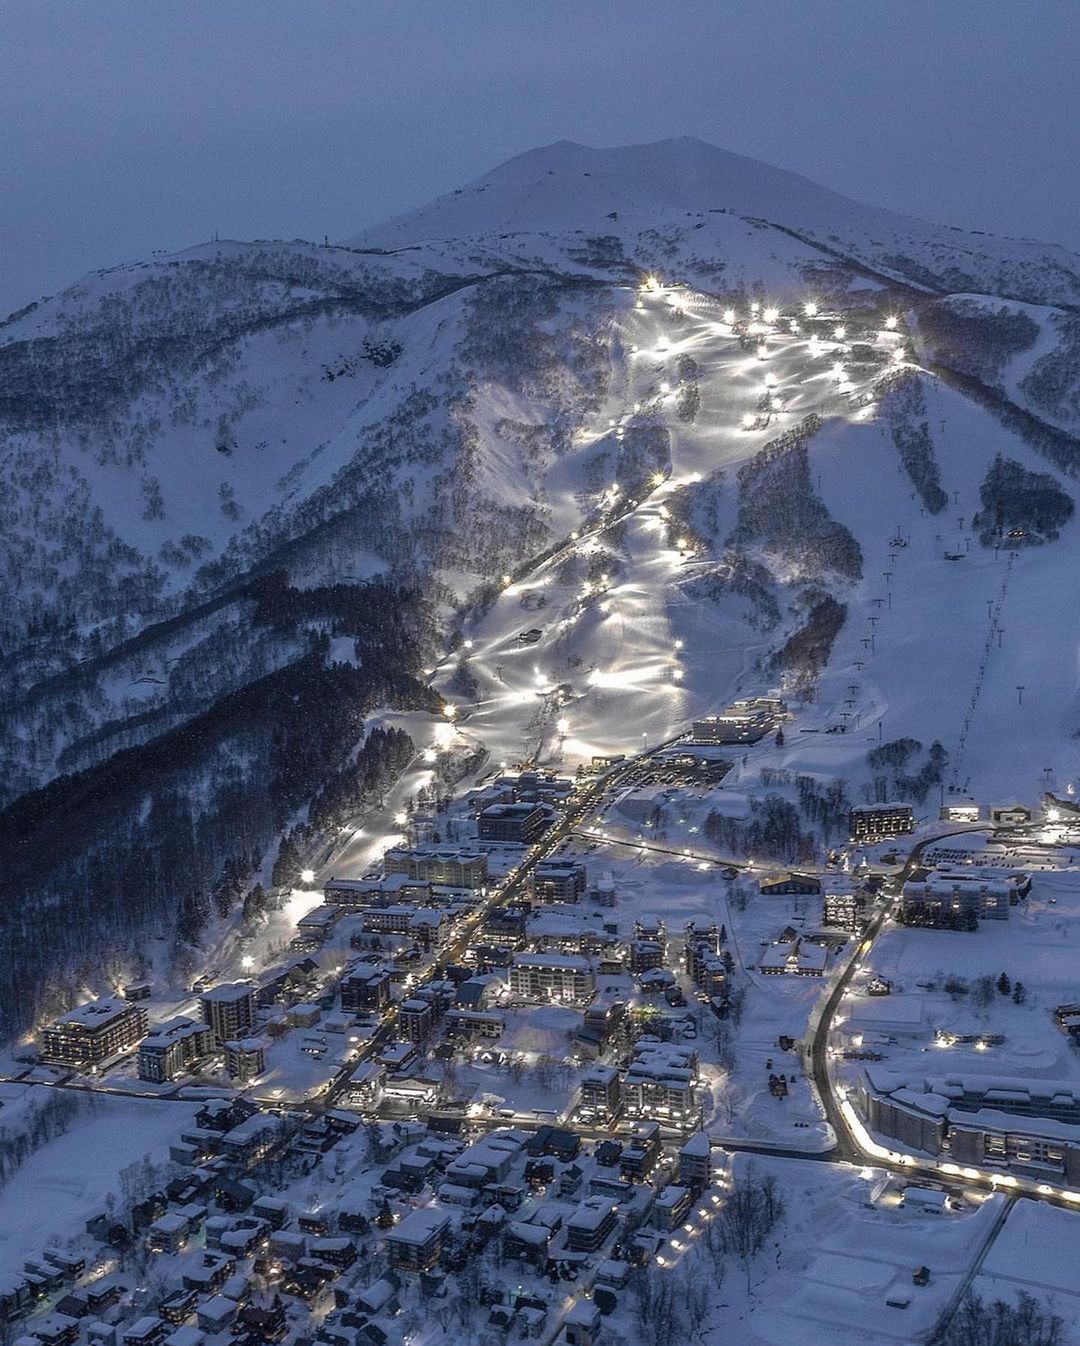 Cities in Japan to see snow - Bird's-eye view of skii resorts in Niseko at night